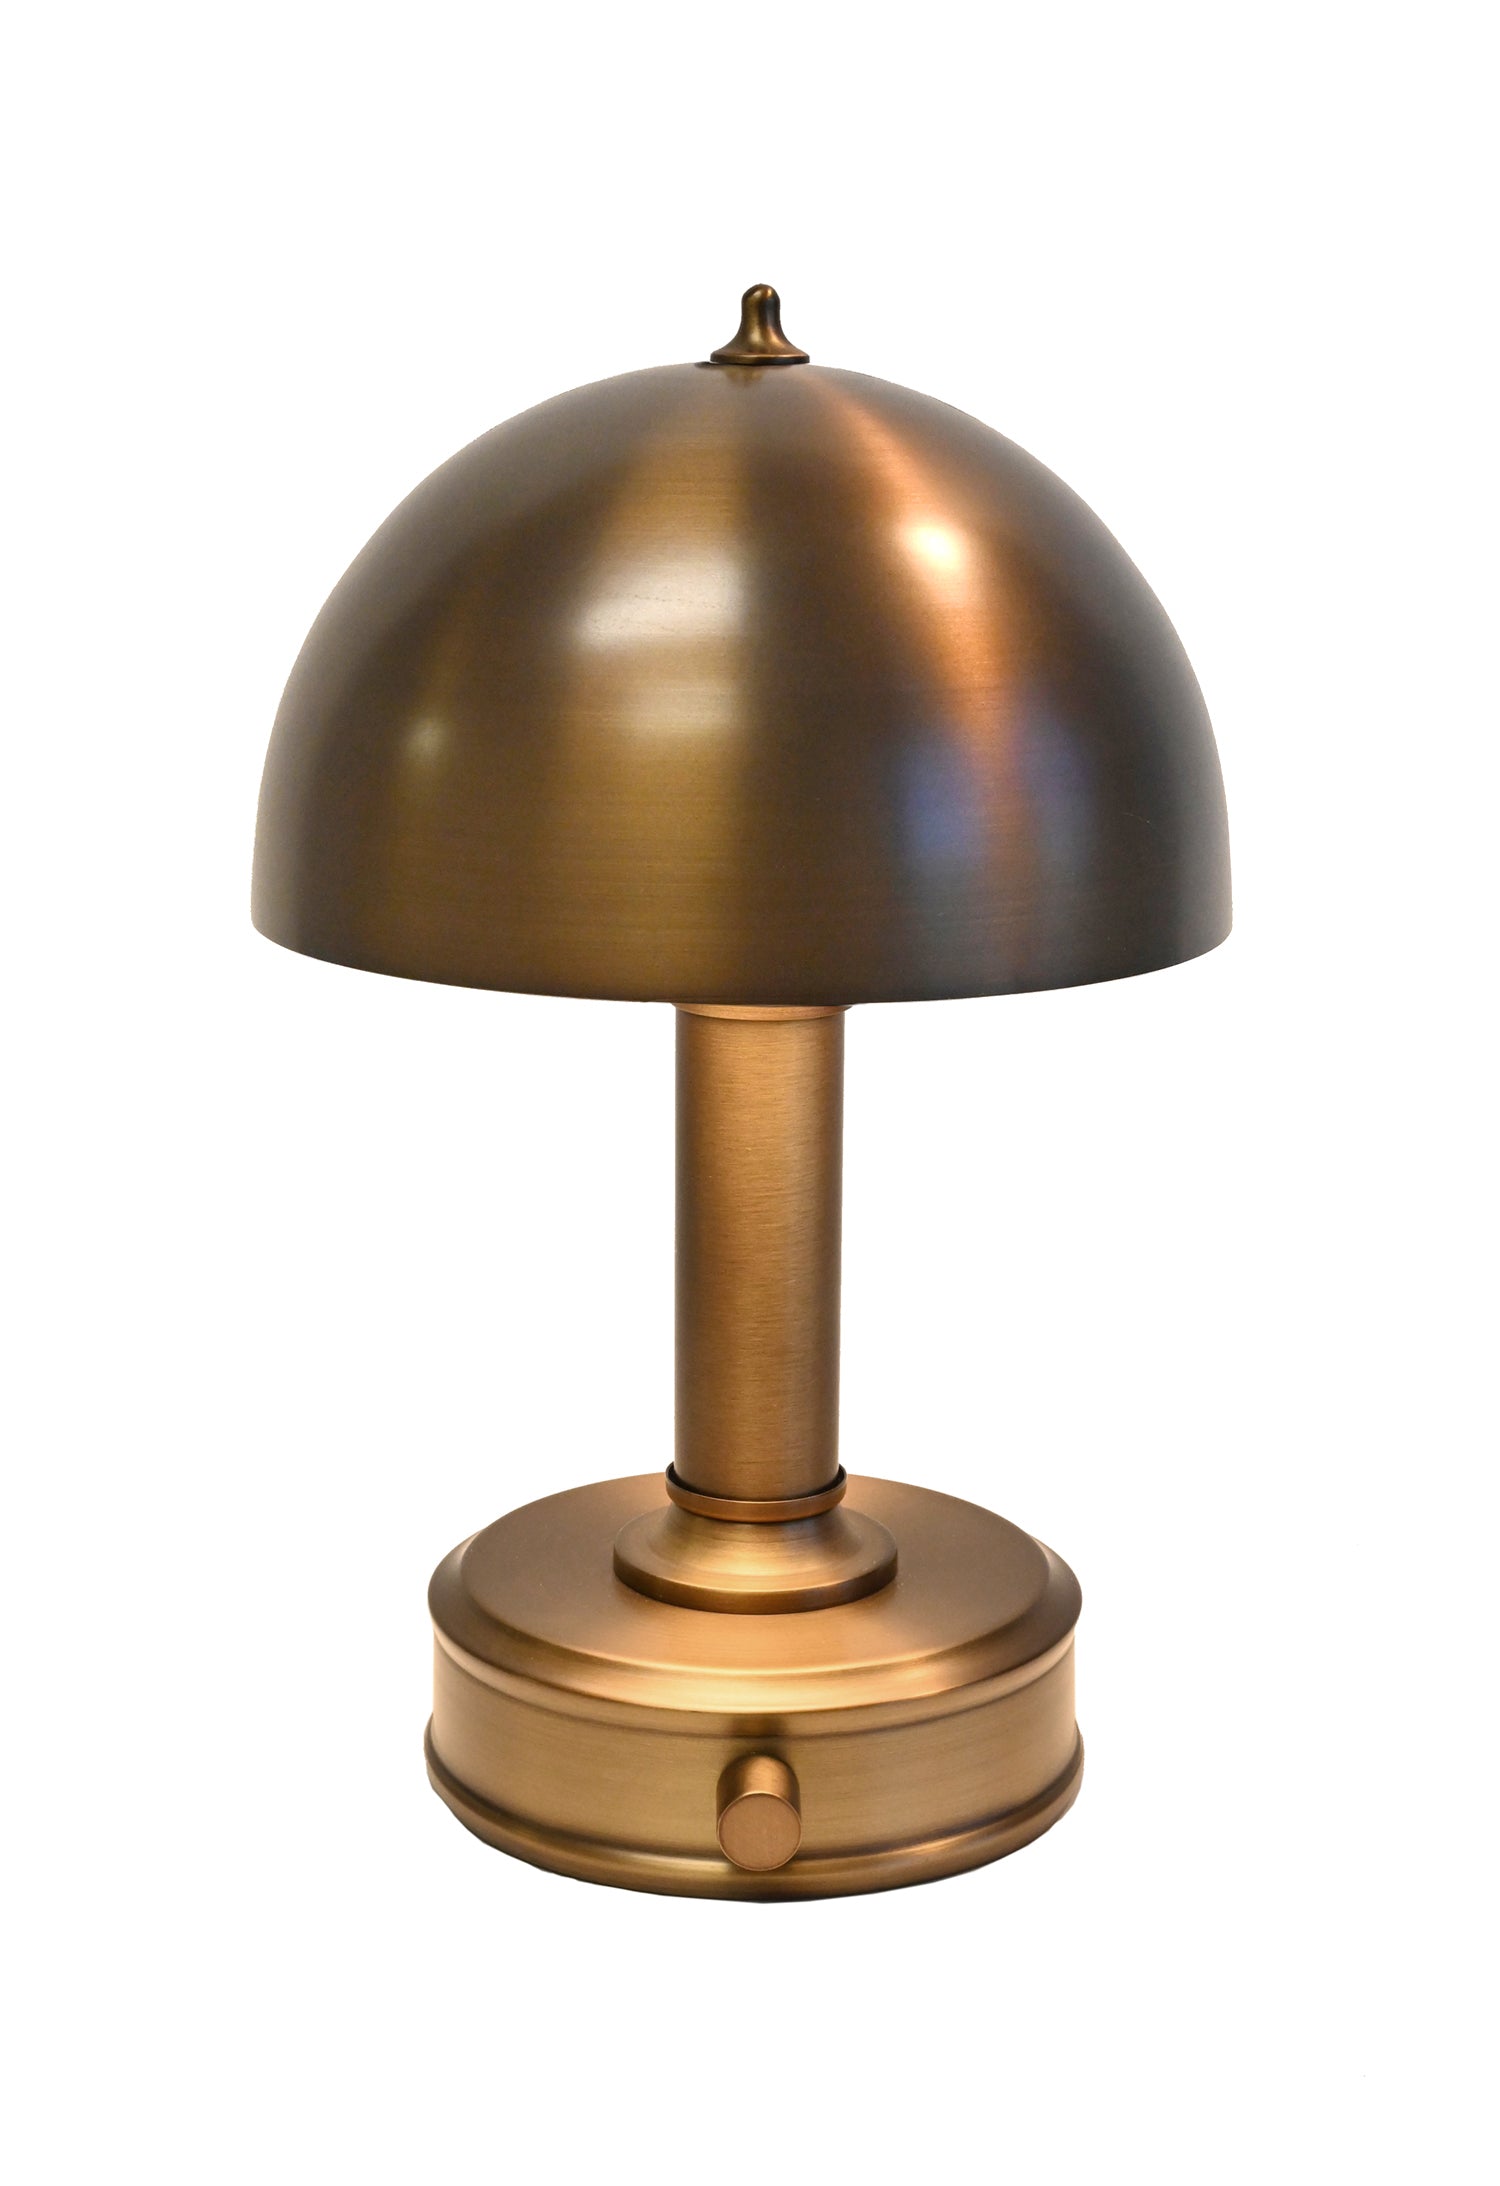 Abbey Cordless Lamp - Dark Antique Brass